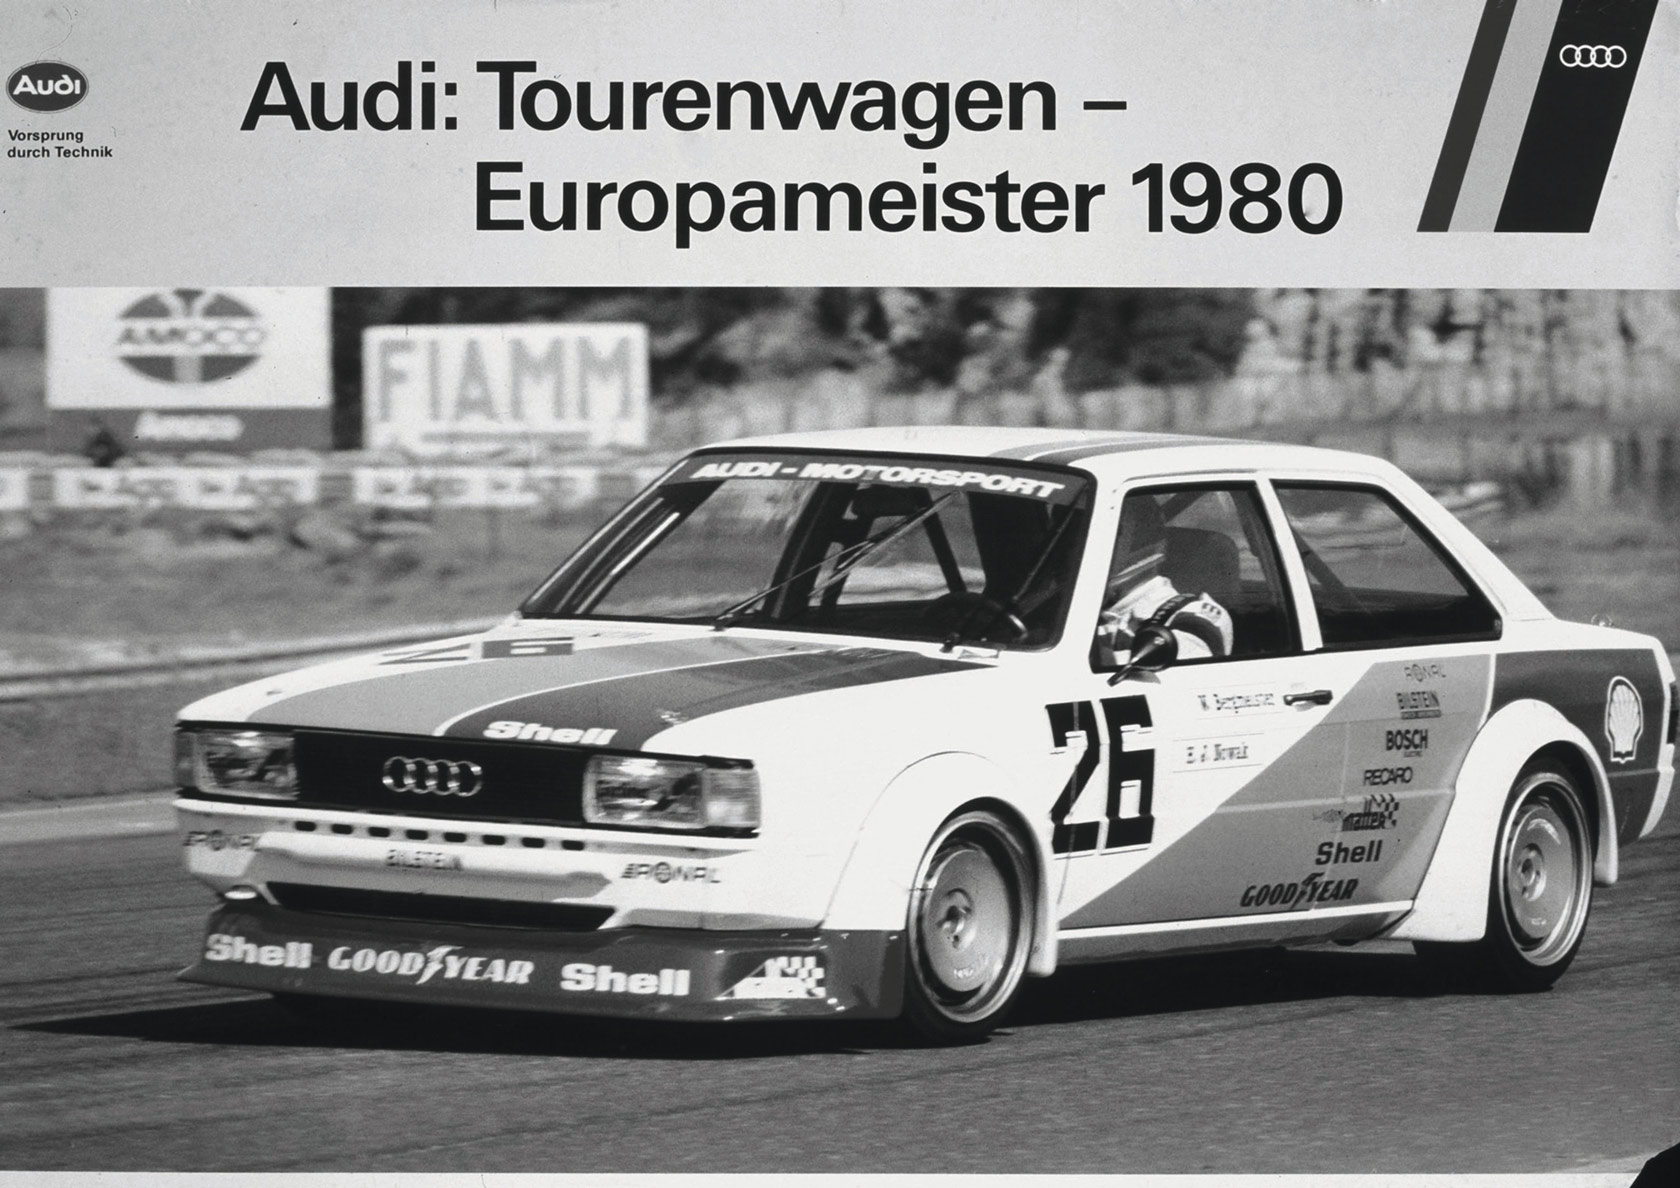 1980 wurde Audi Tourenwagen-Europameister